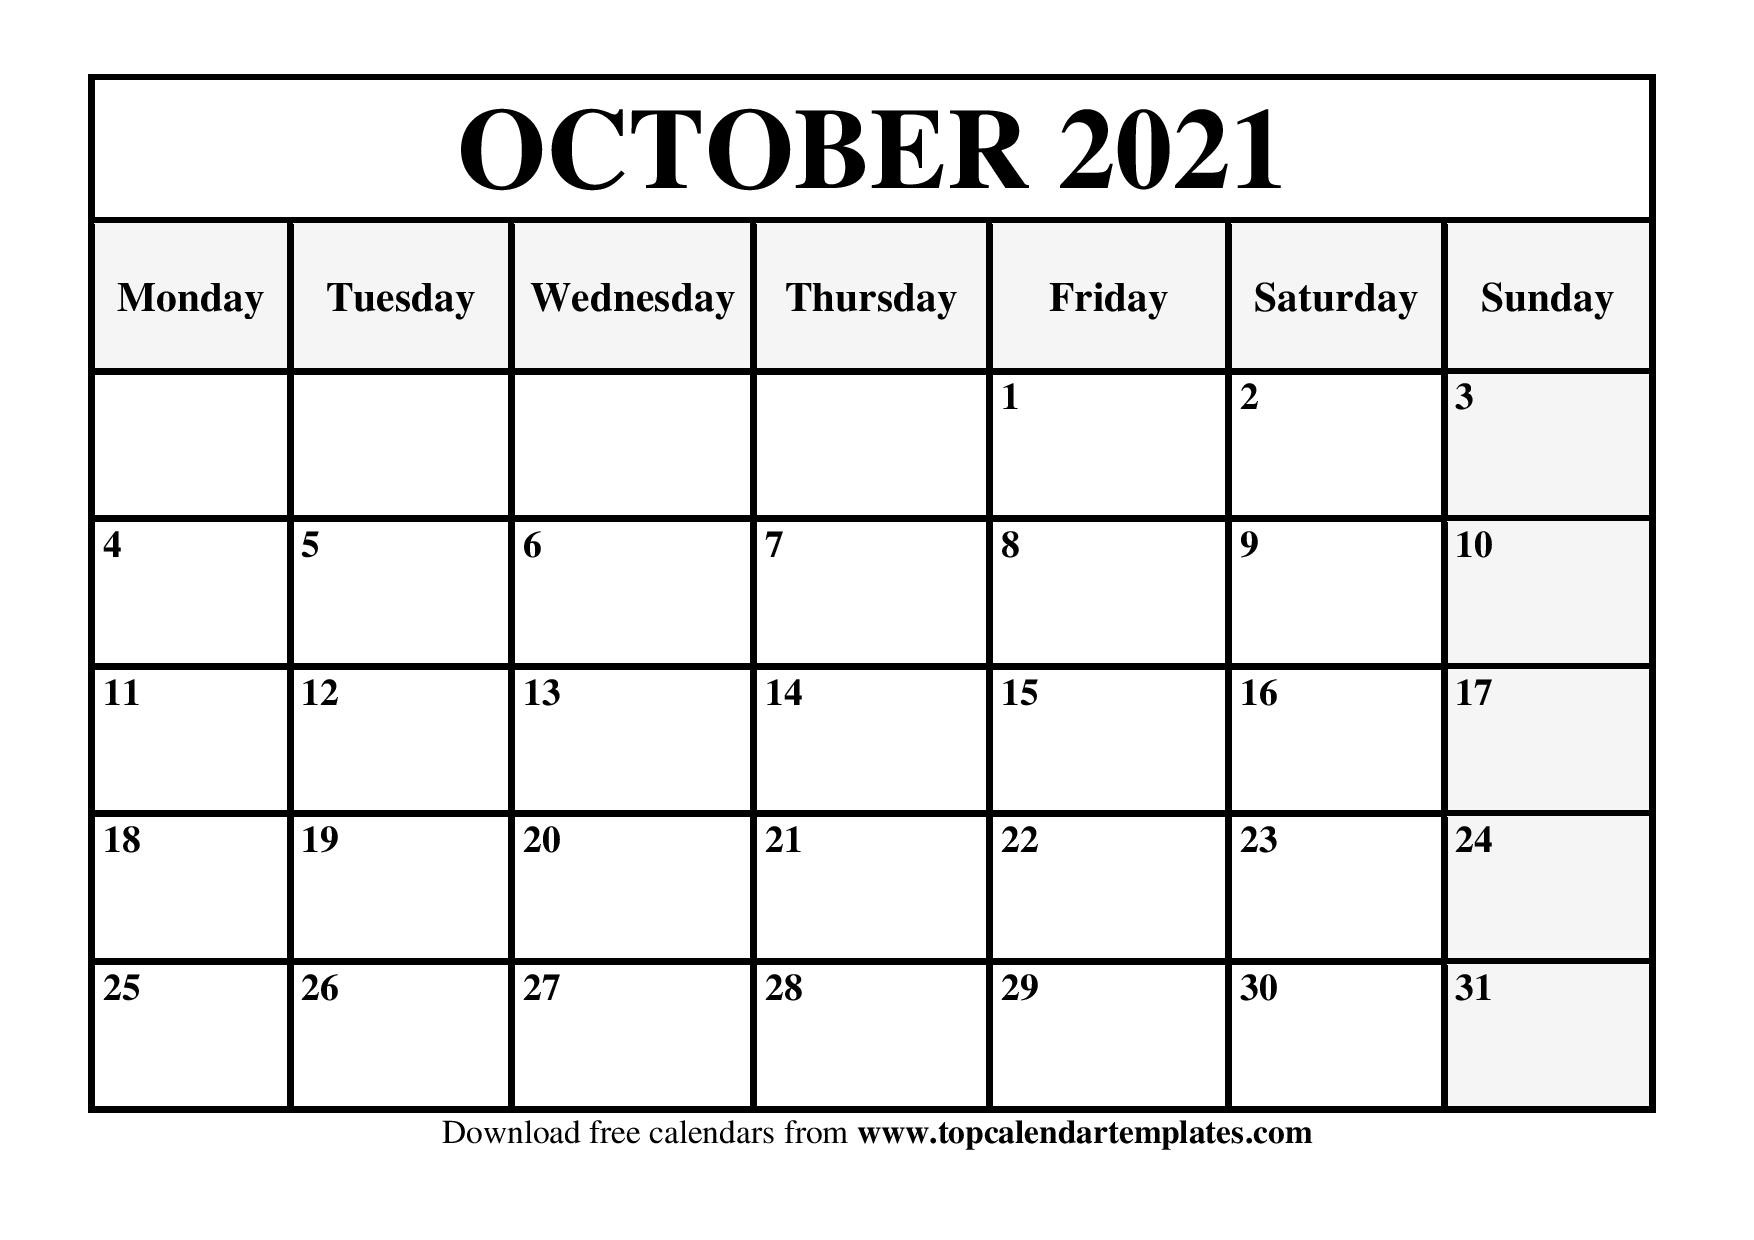 Free October 2021 Calendar Printable - Blank Templates-Free Monthly Calendar 2021